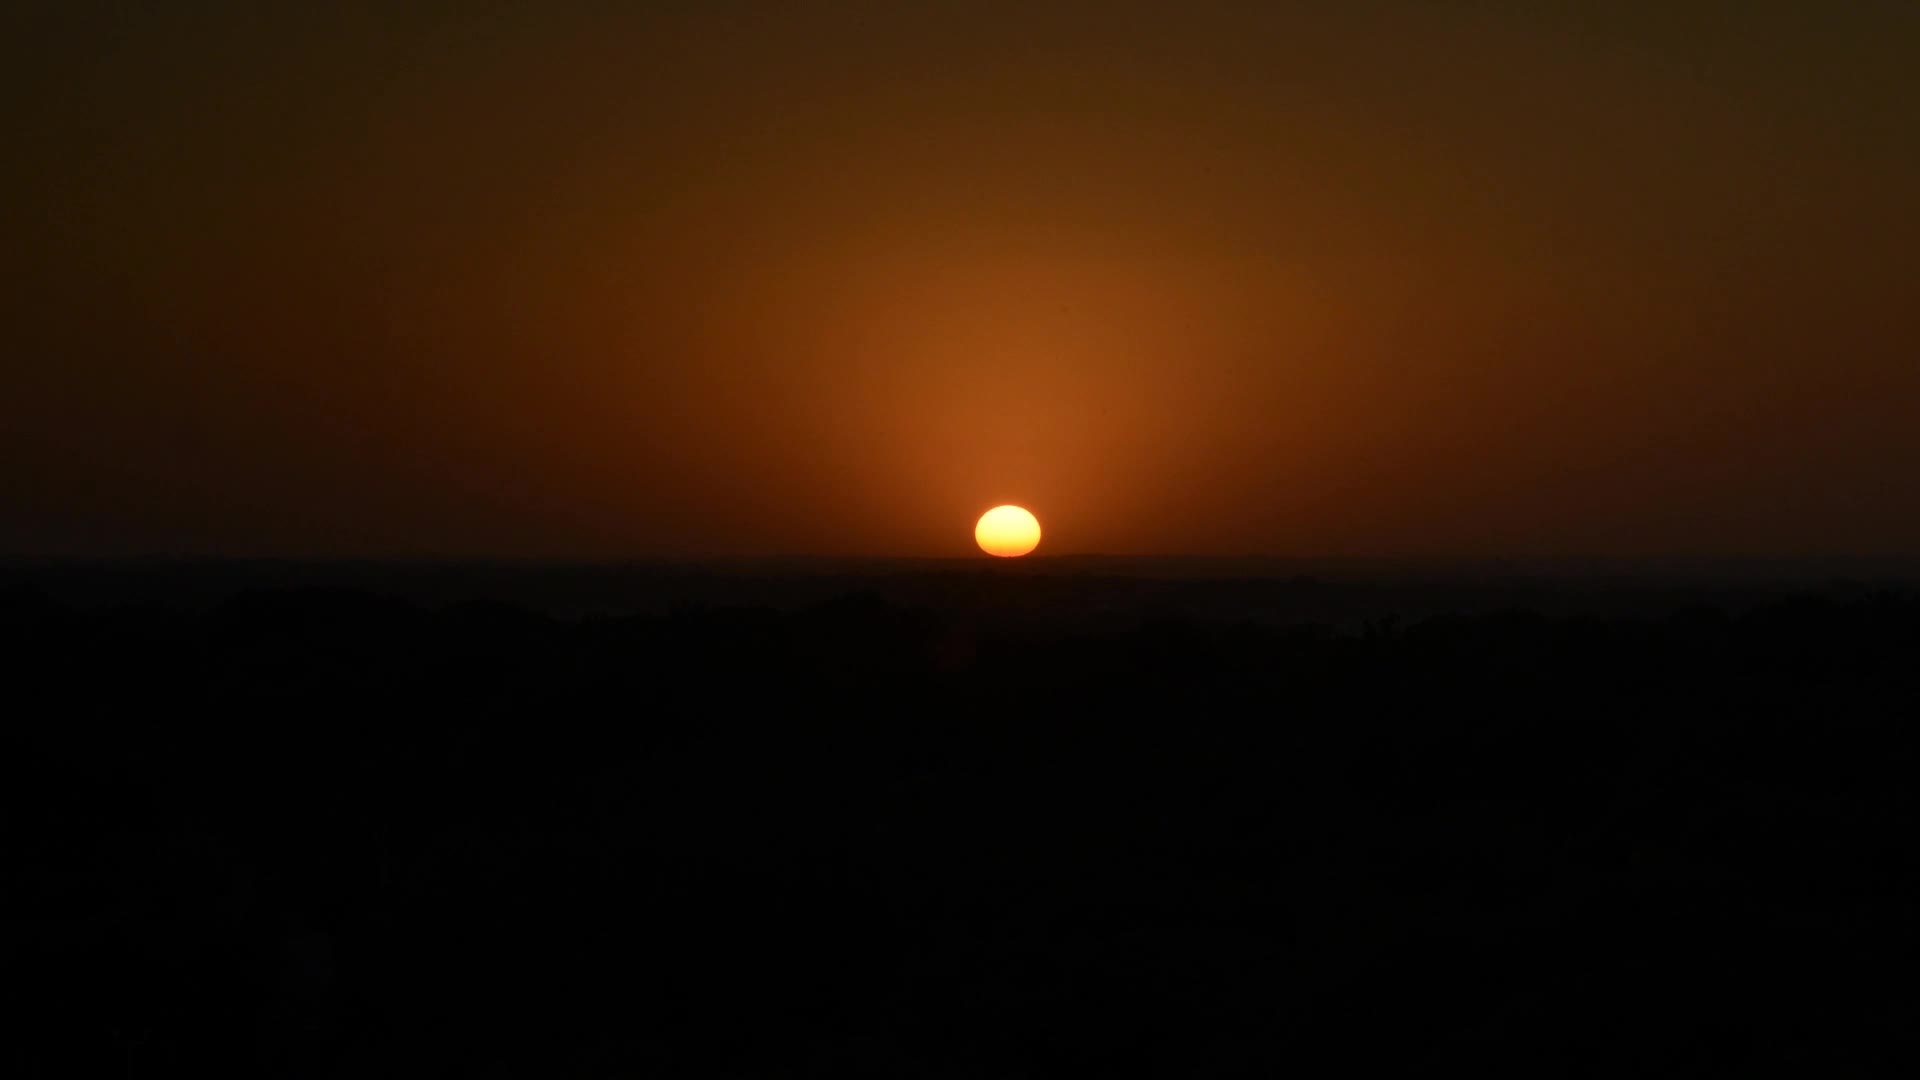 Nebraska Sunset